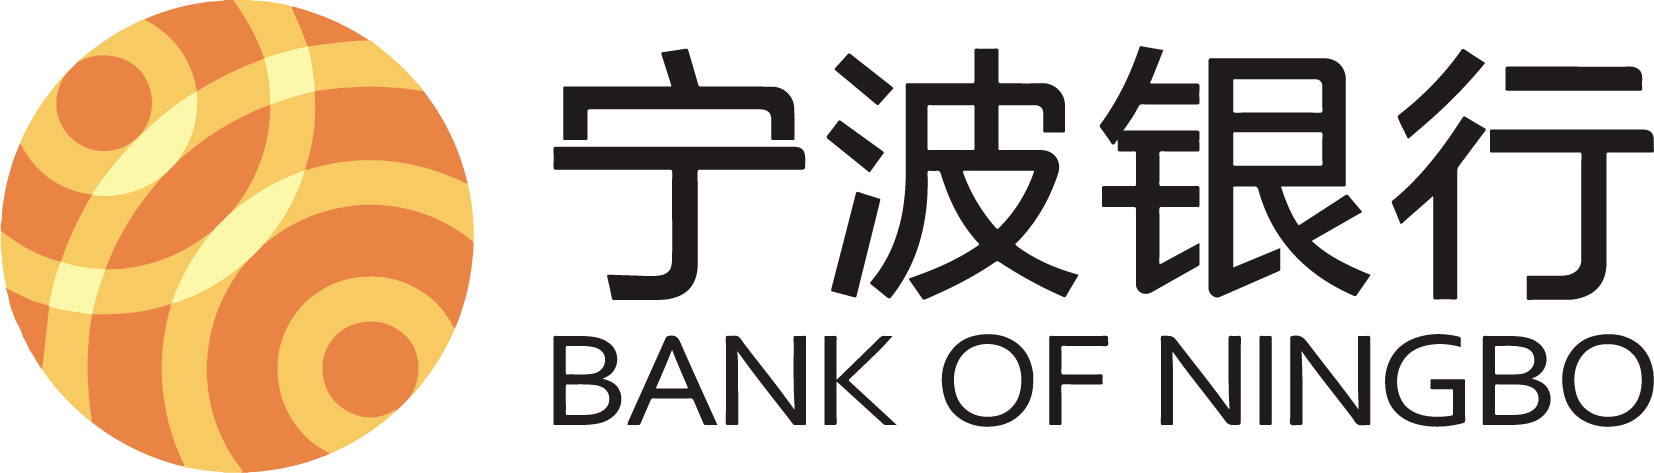 Bank of Ningbo Logo png